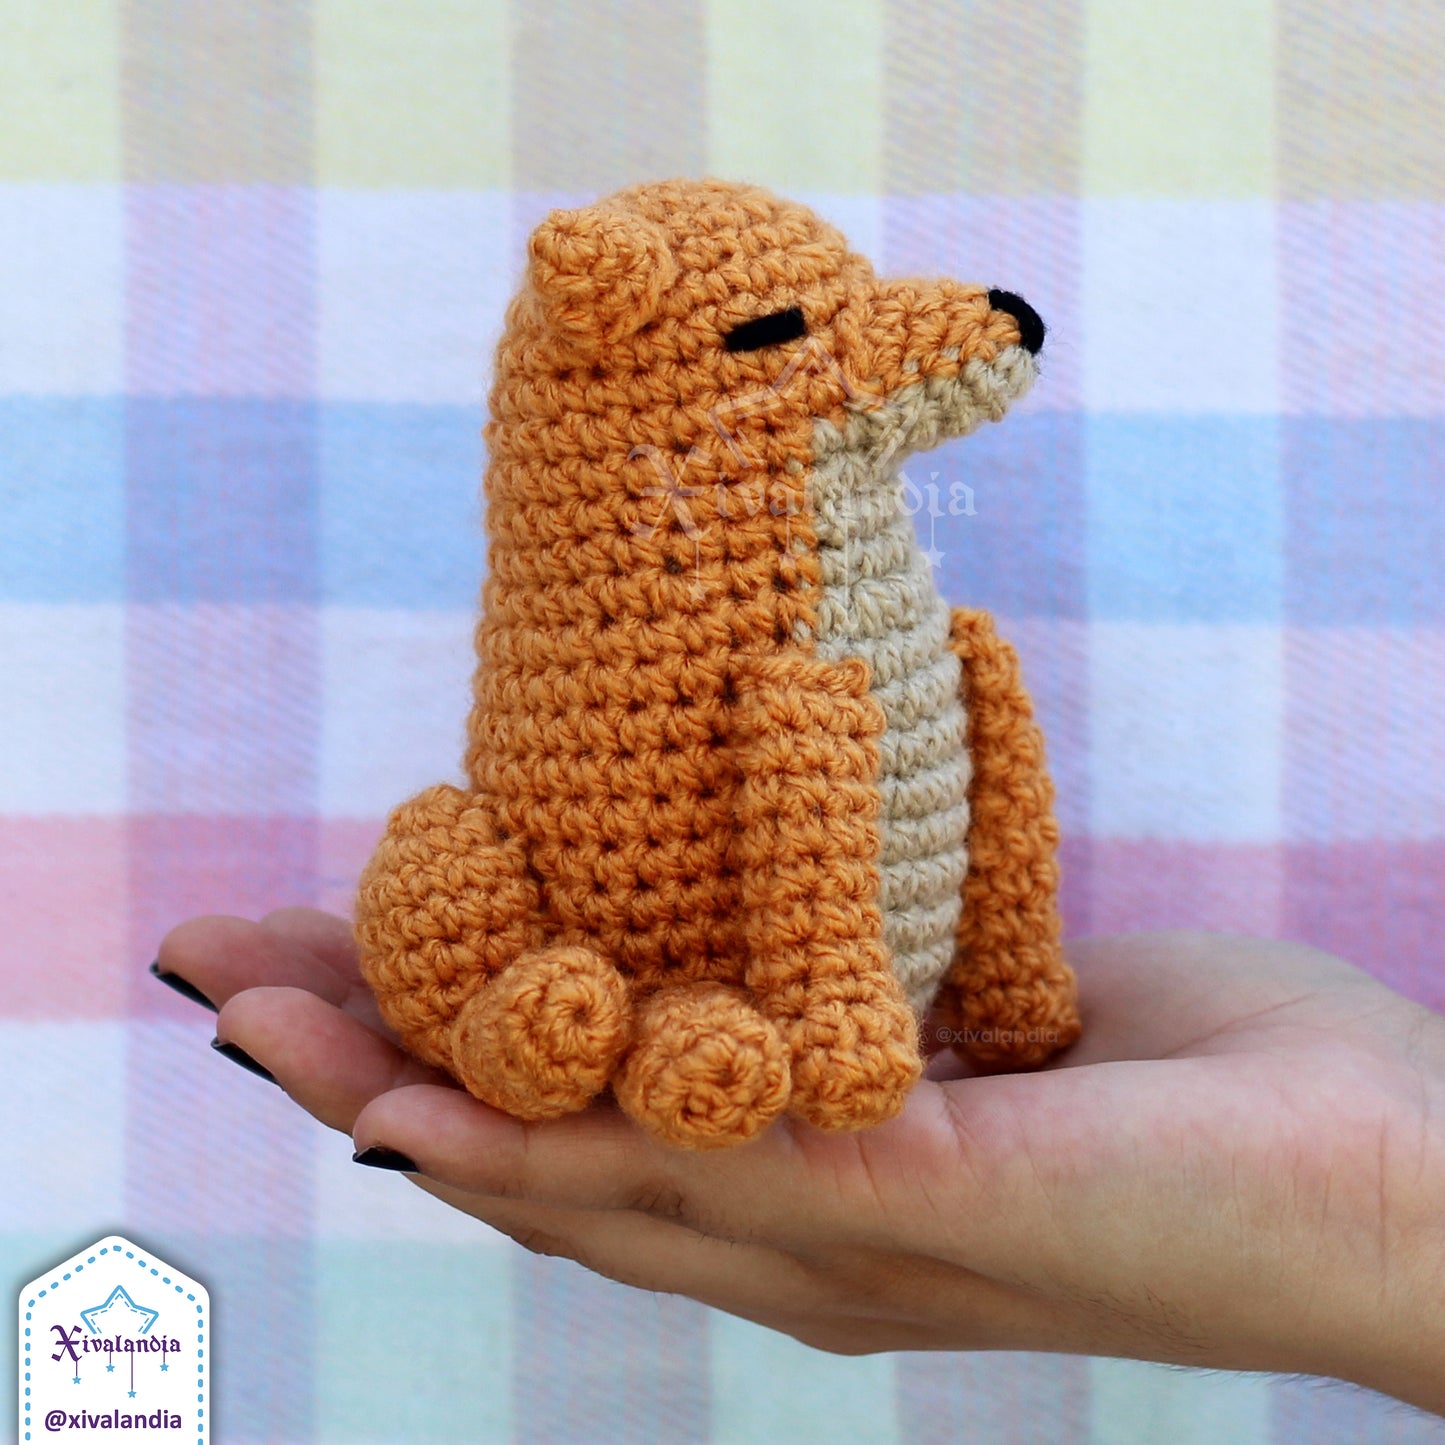 Dog Cheems meme plush, shiba inu crochet - 4 in/10cm - handmade amigurumi